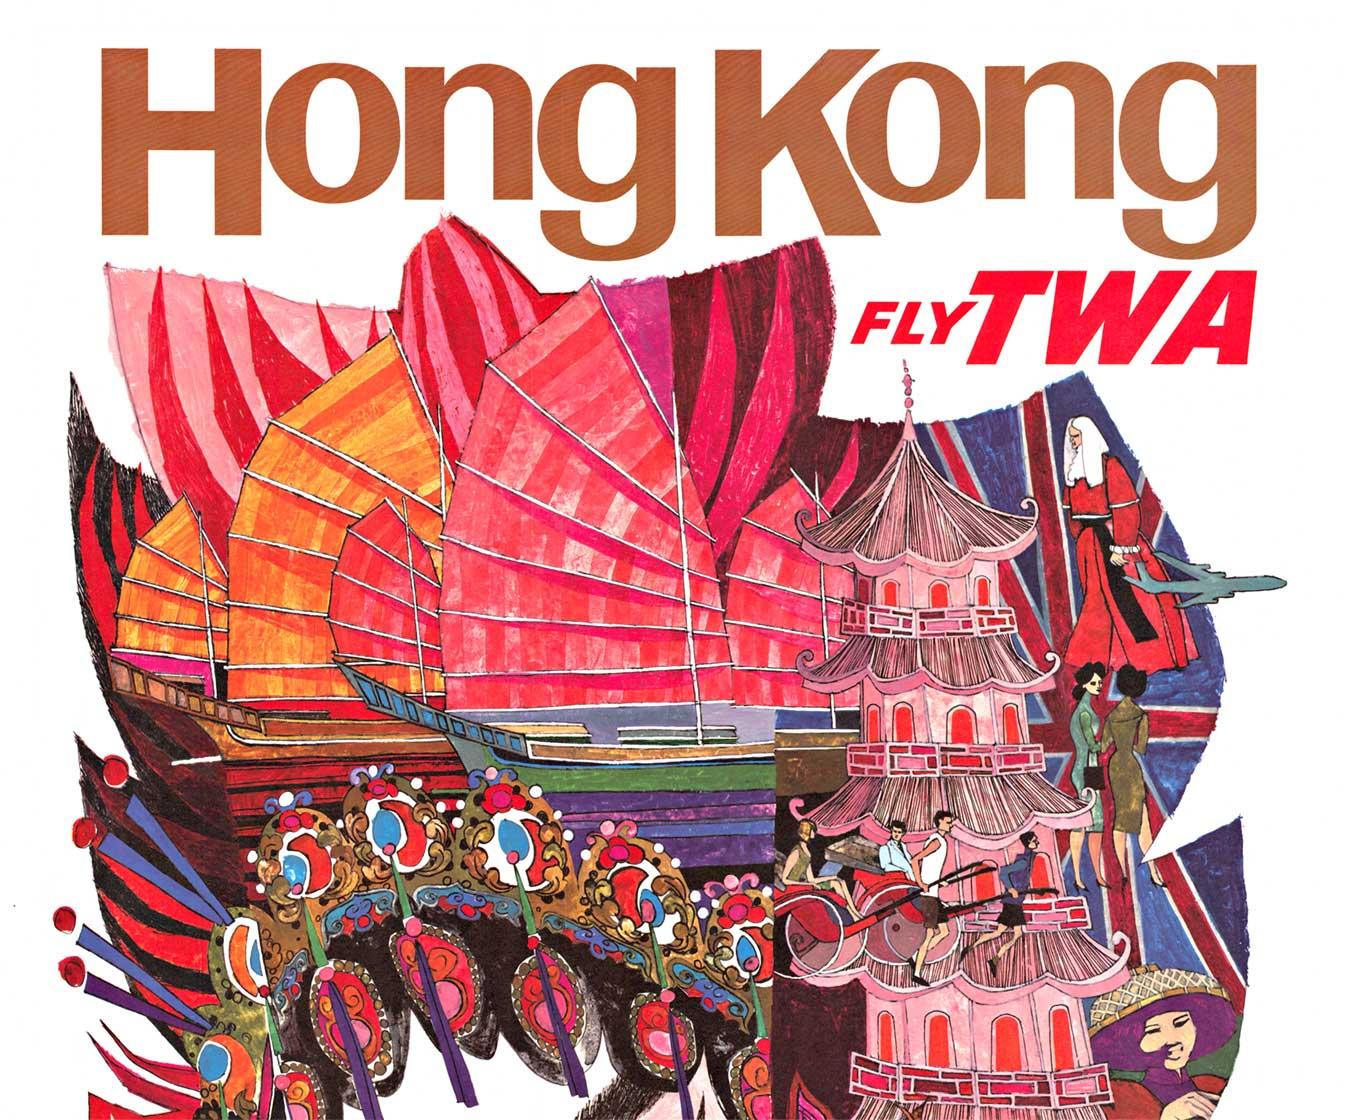 Original Hong Kong Fly TWA vintage travel poster - Print by David Klein